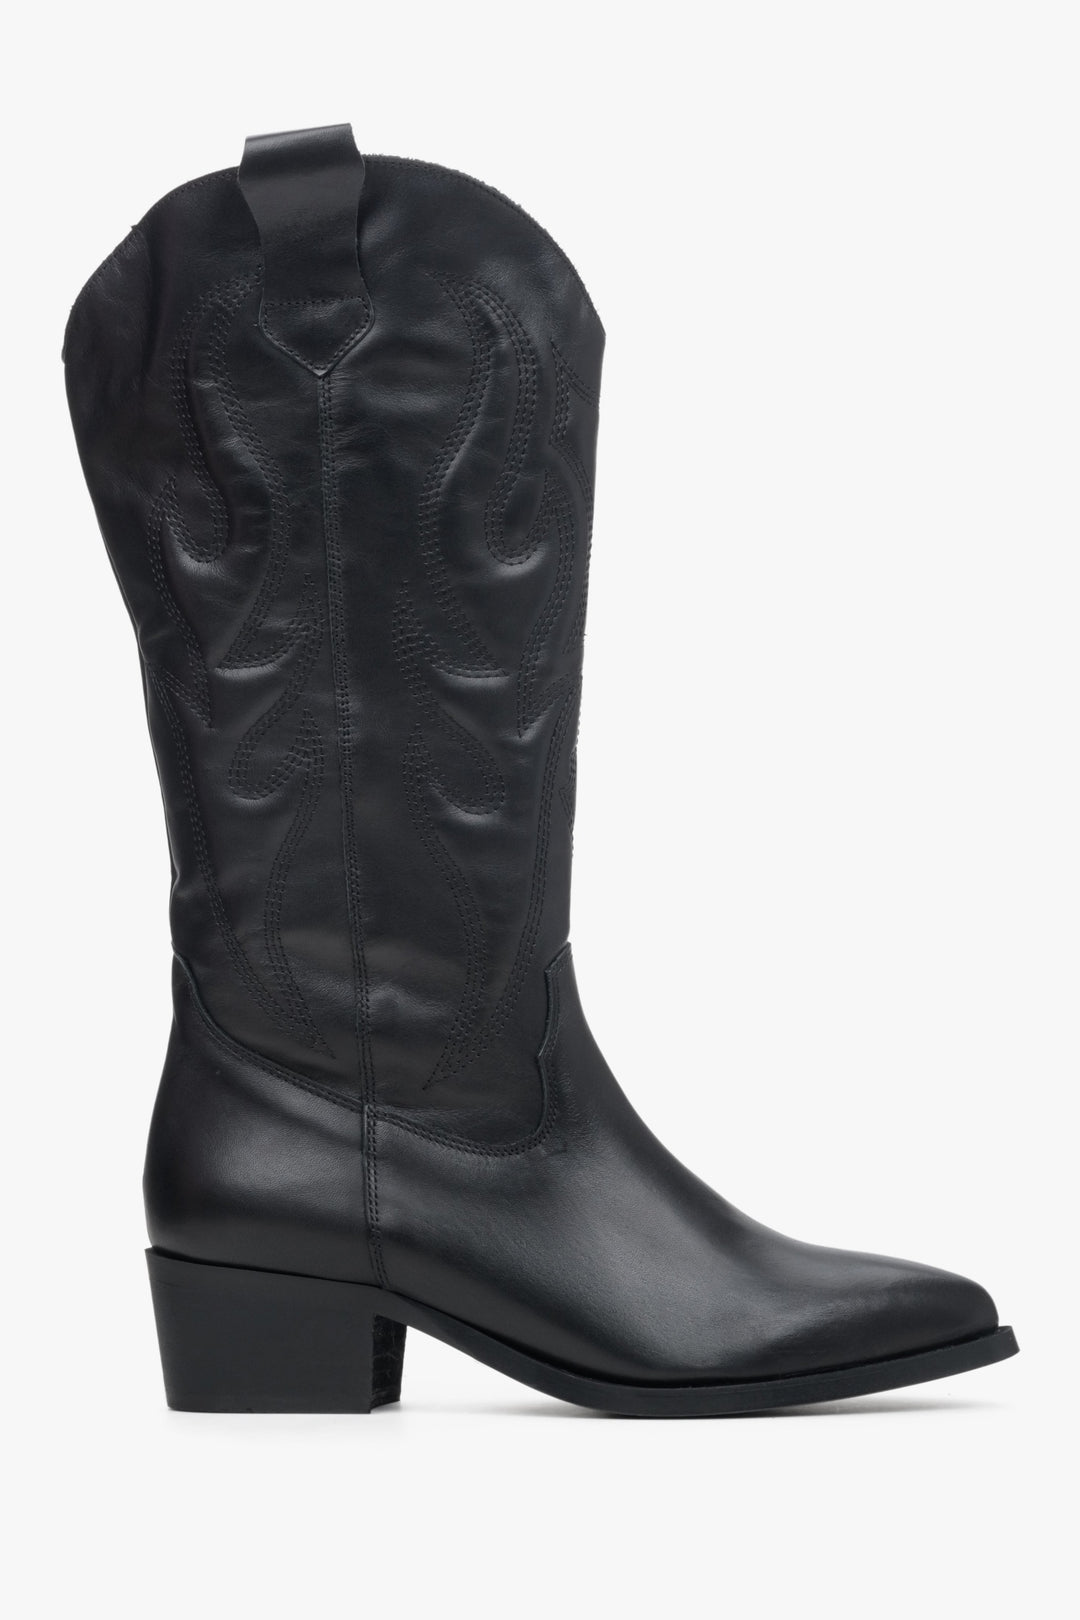 Estro black leather cowboy boots - boot profile.